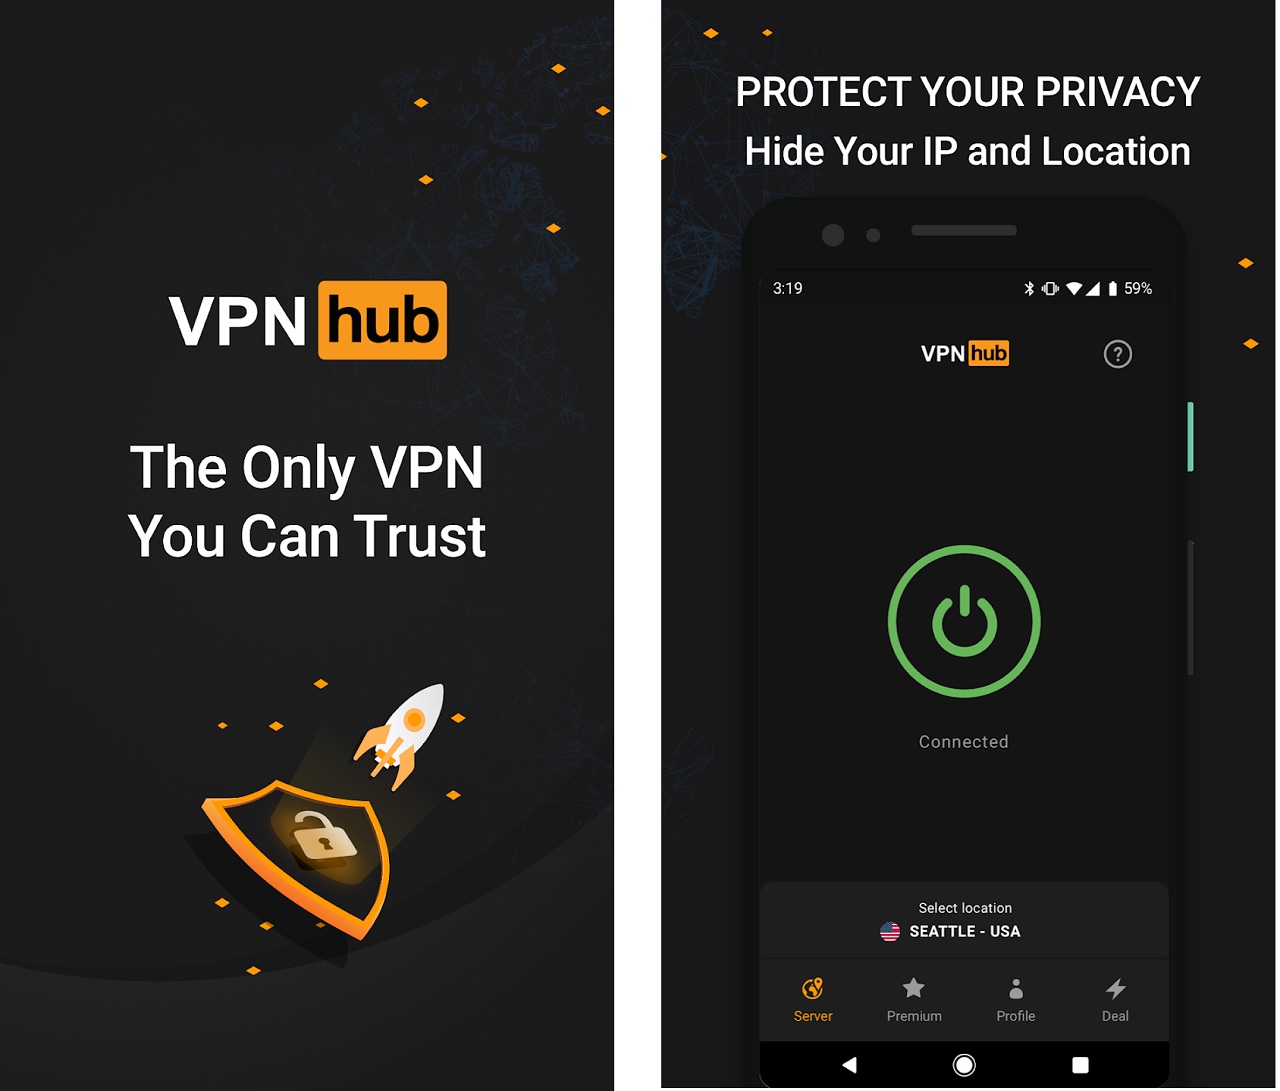 VPNhub hack